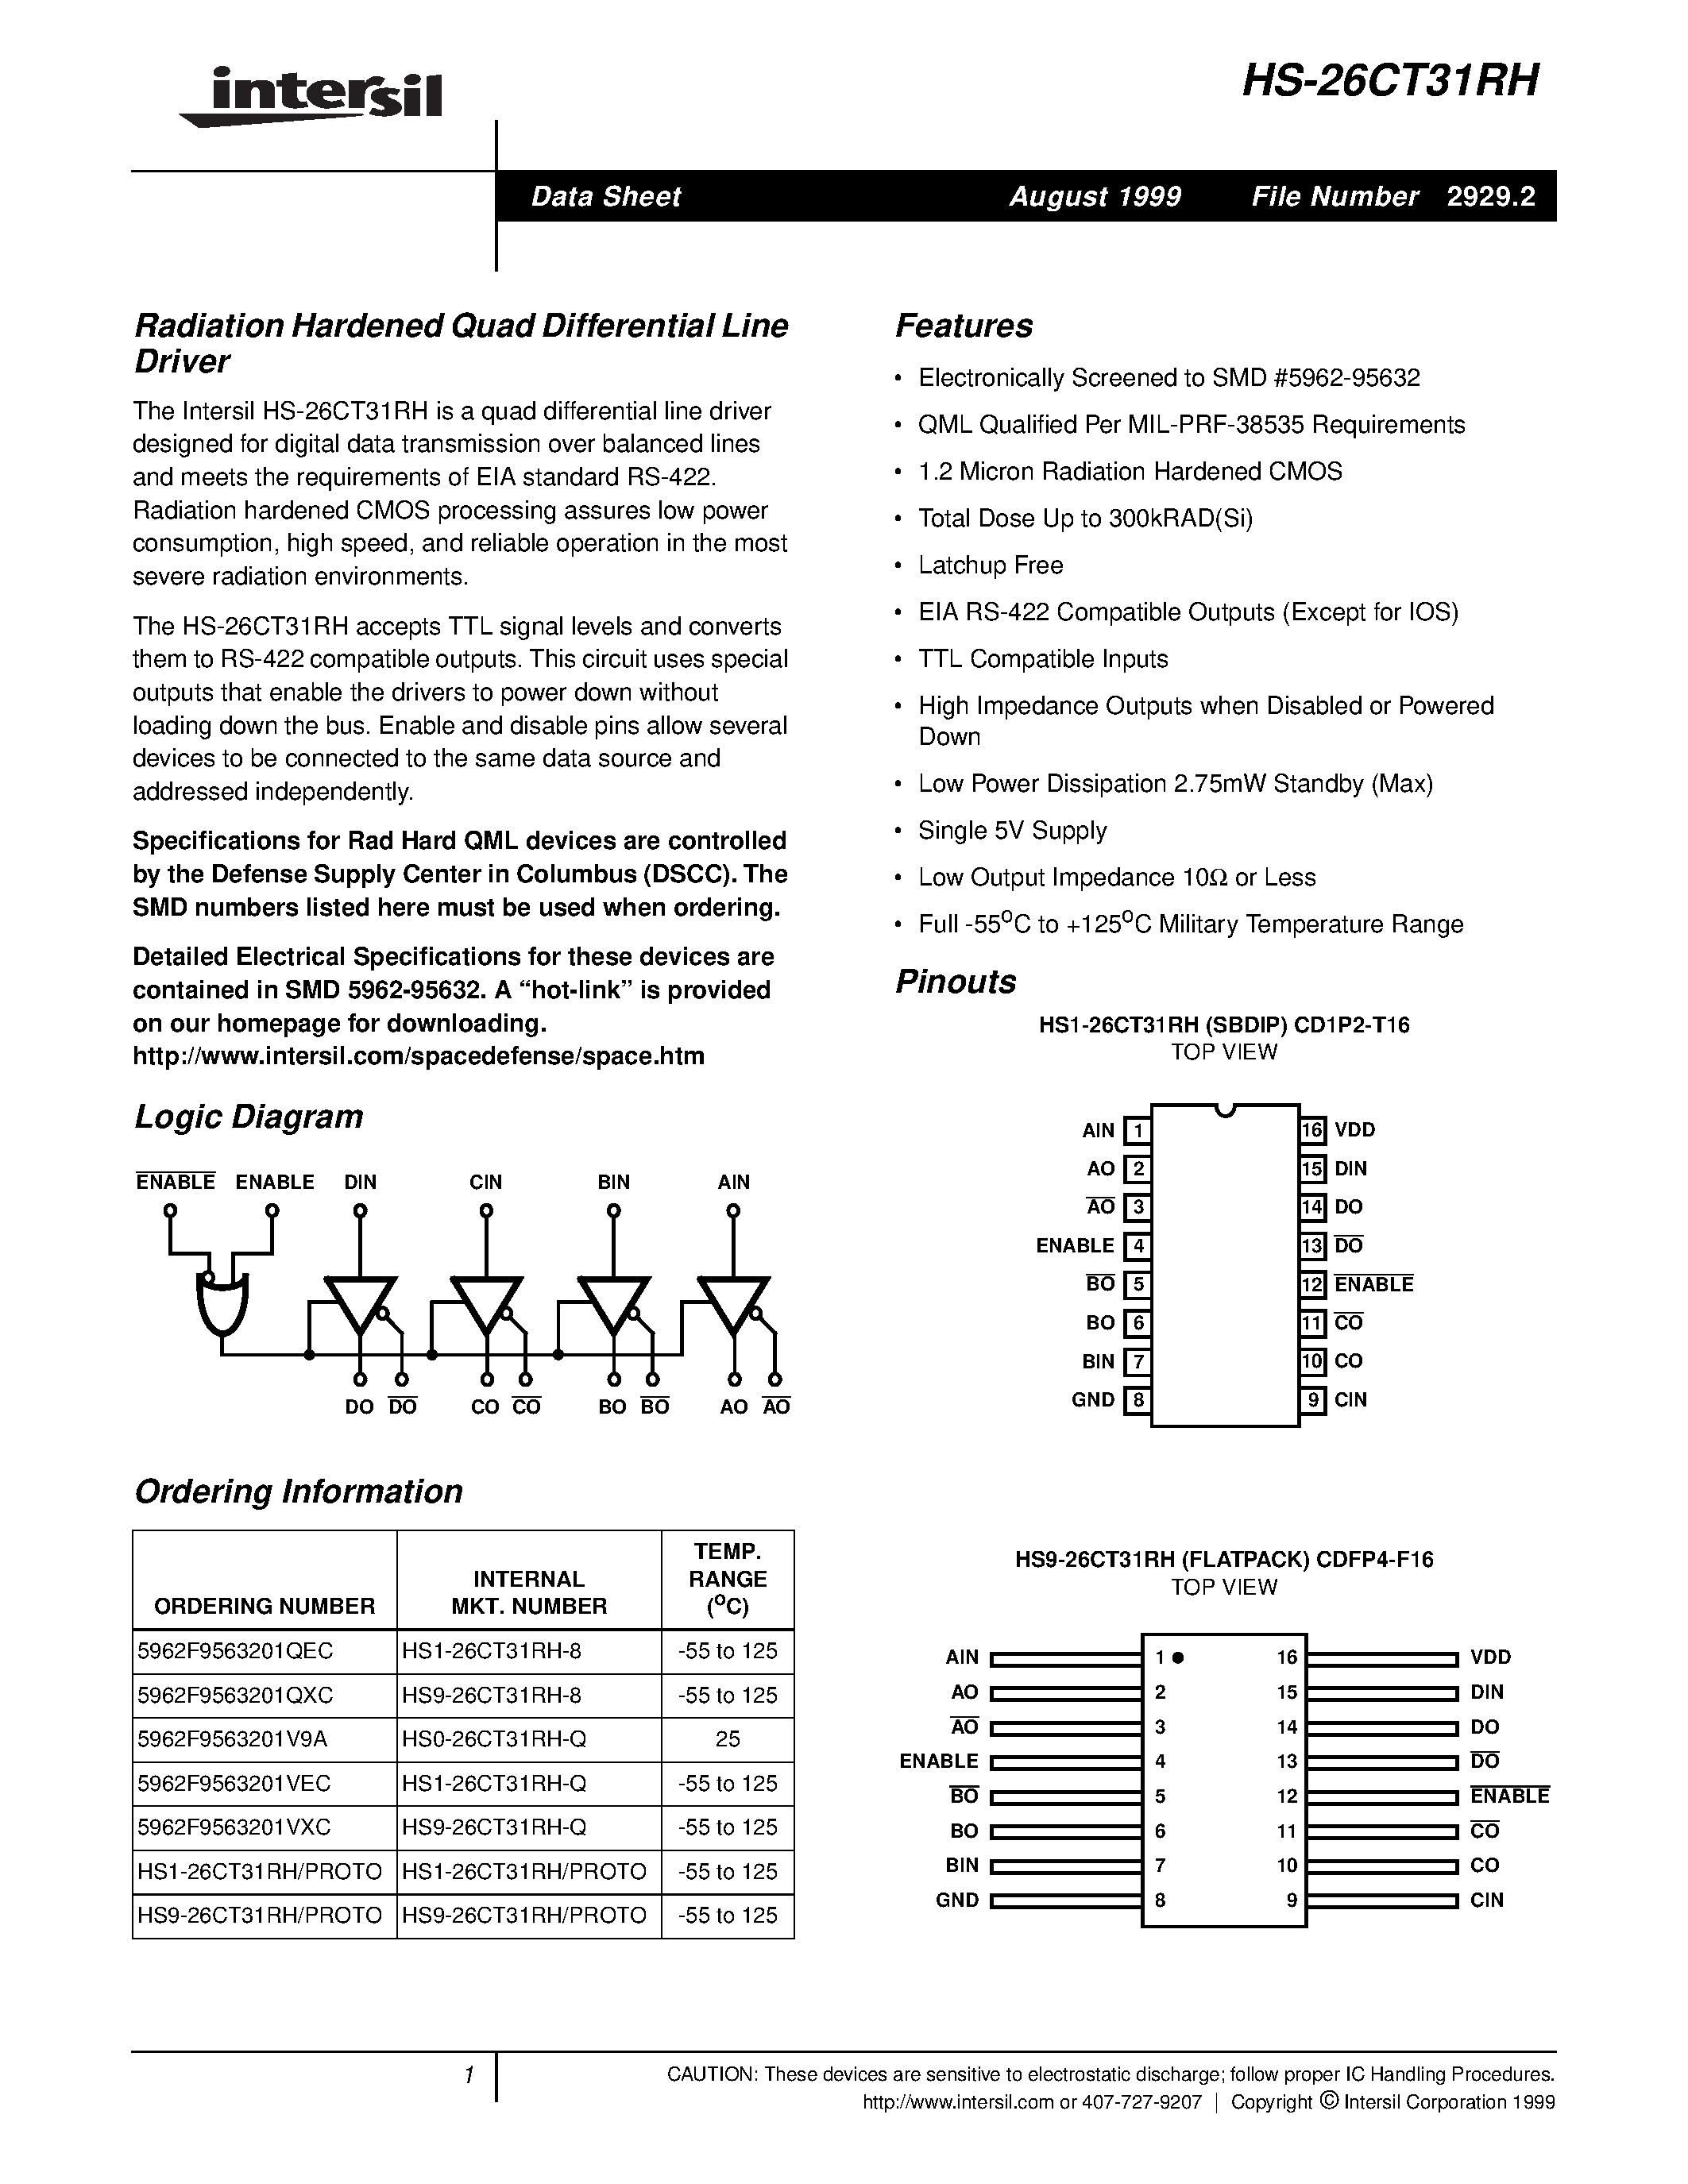 Даташит HS1-26CT31RH-Q - Radiation Hardened Quad Differential Line Driver страница 1